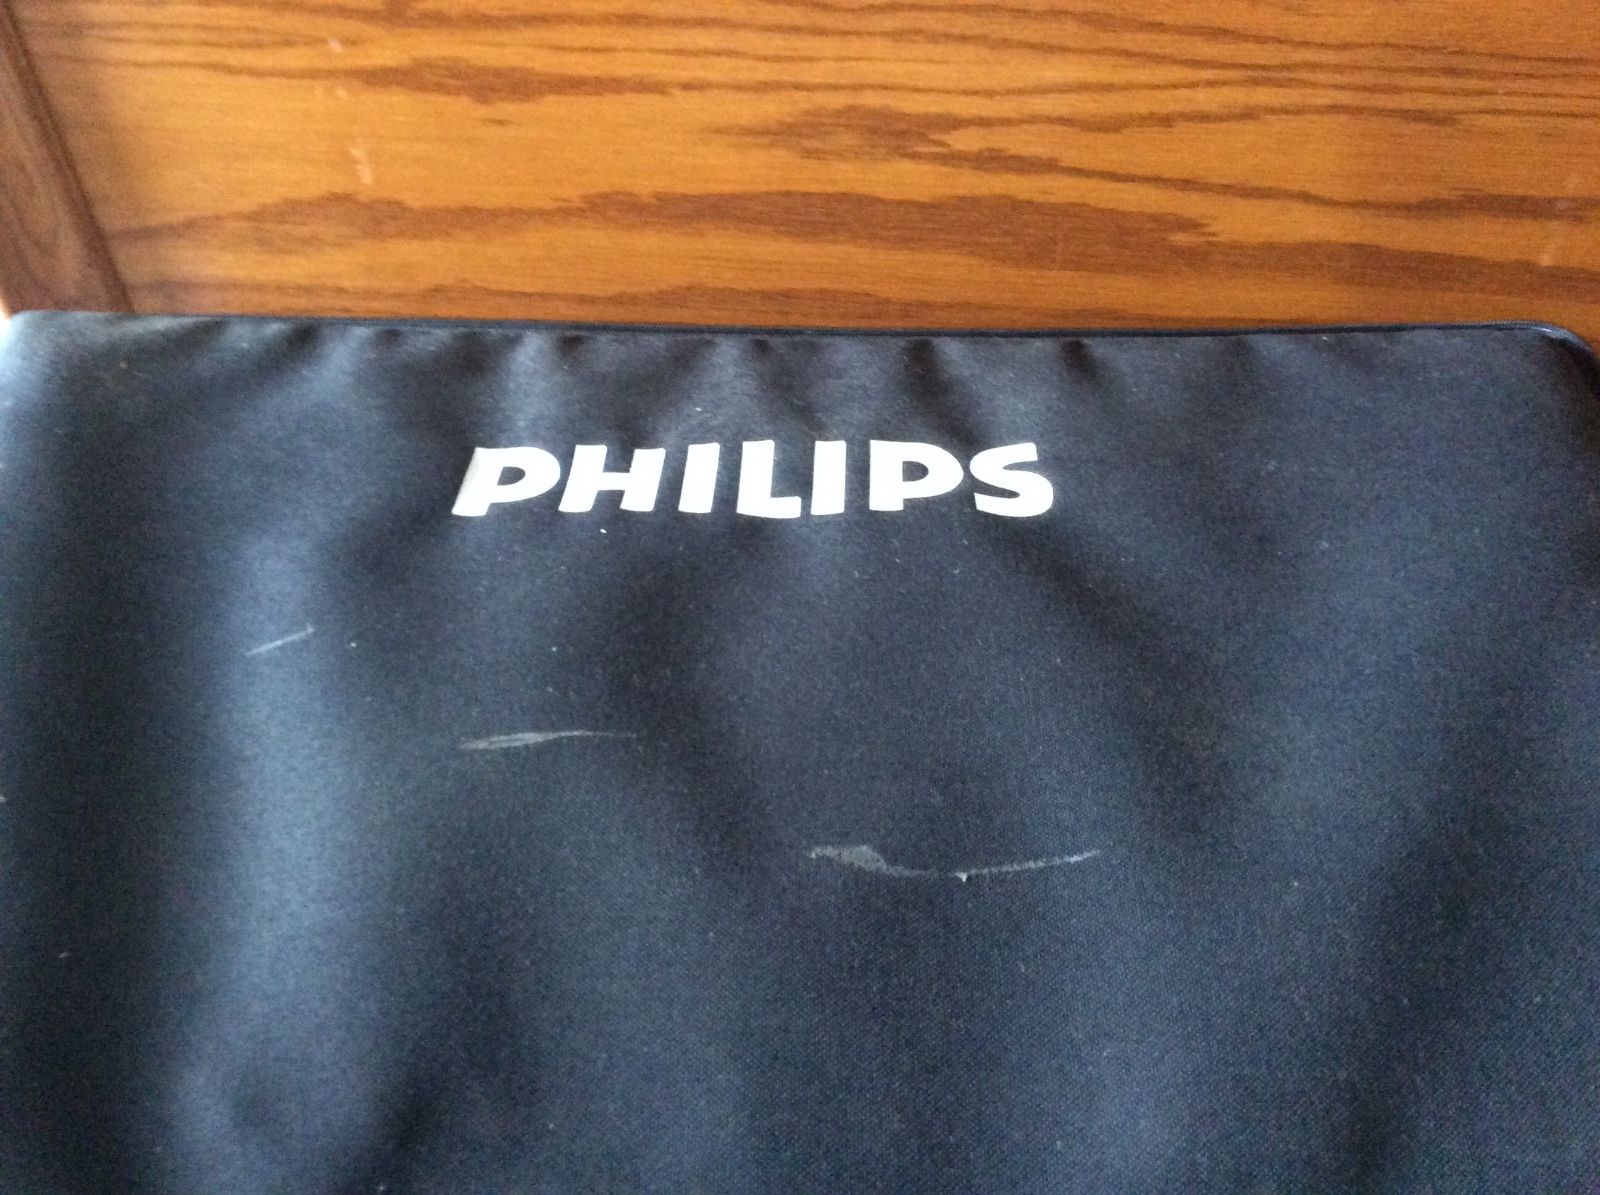 closeup of Philips logo